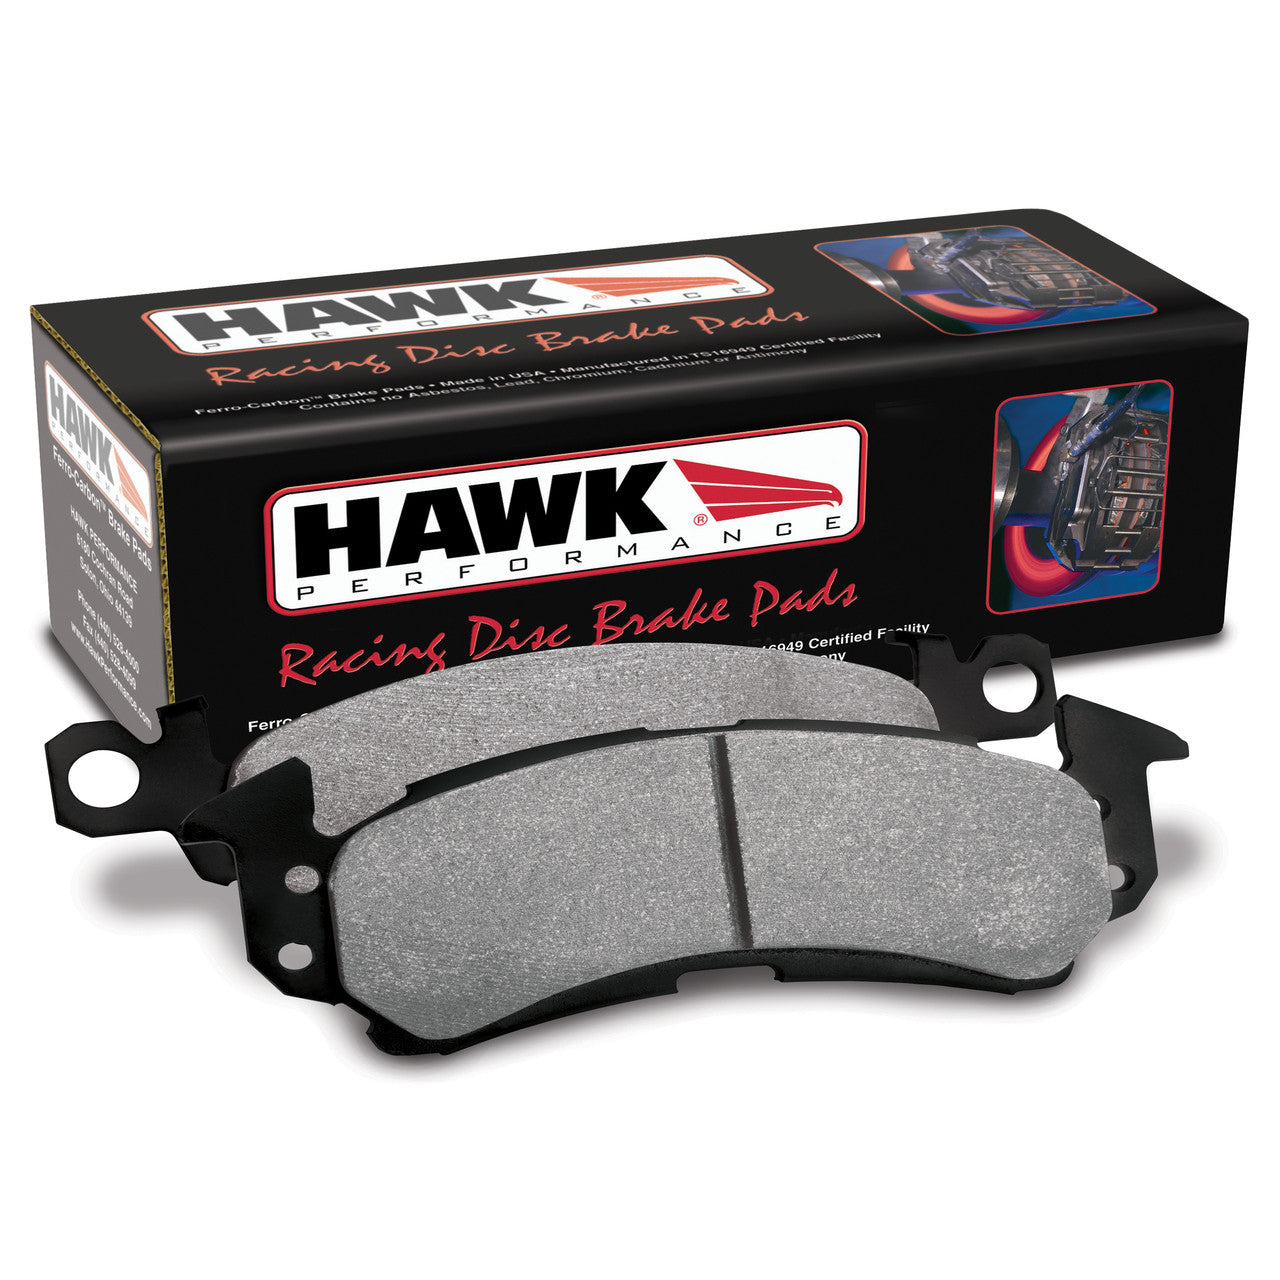 HAWK PERFORMANCE PADS (HB245N.631) - HP+